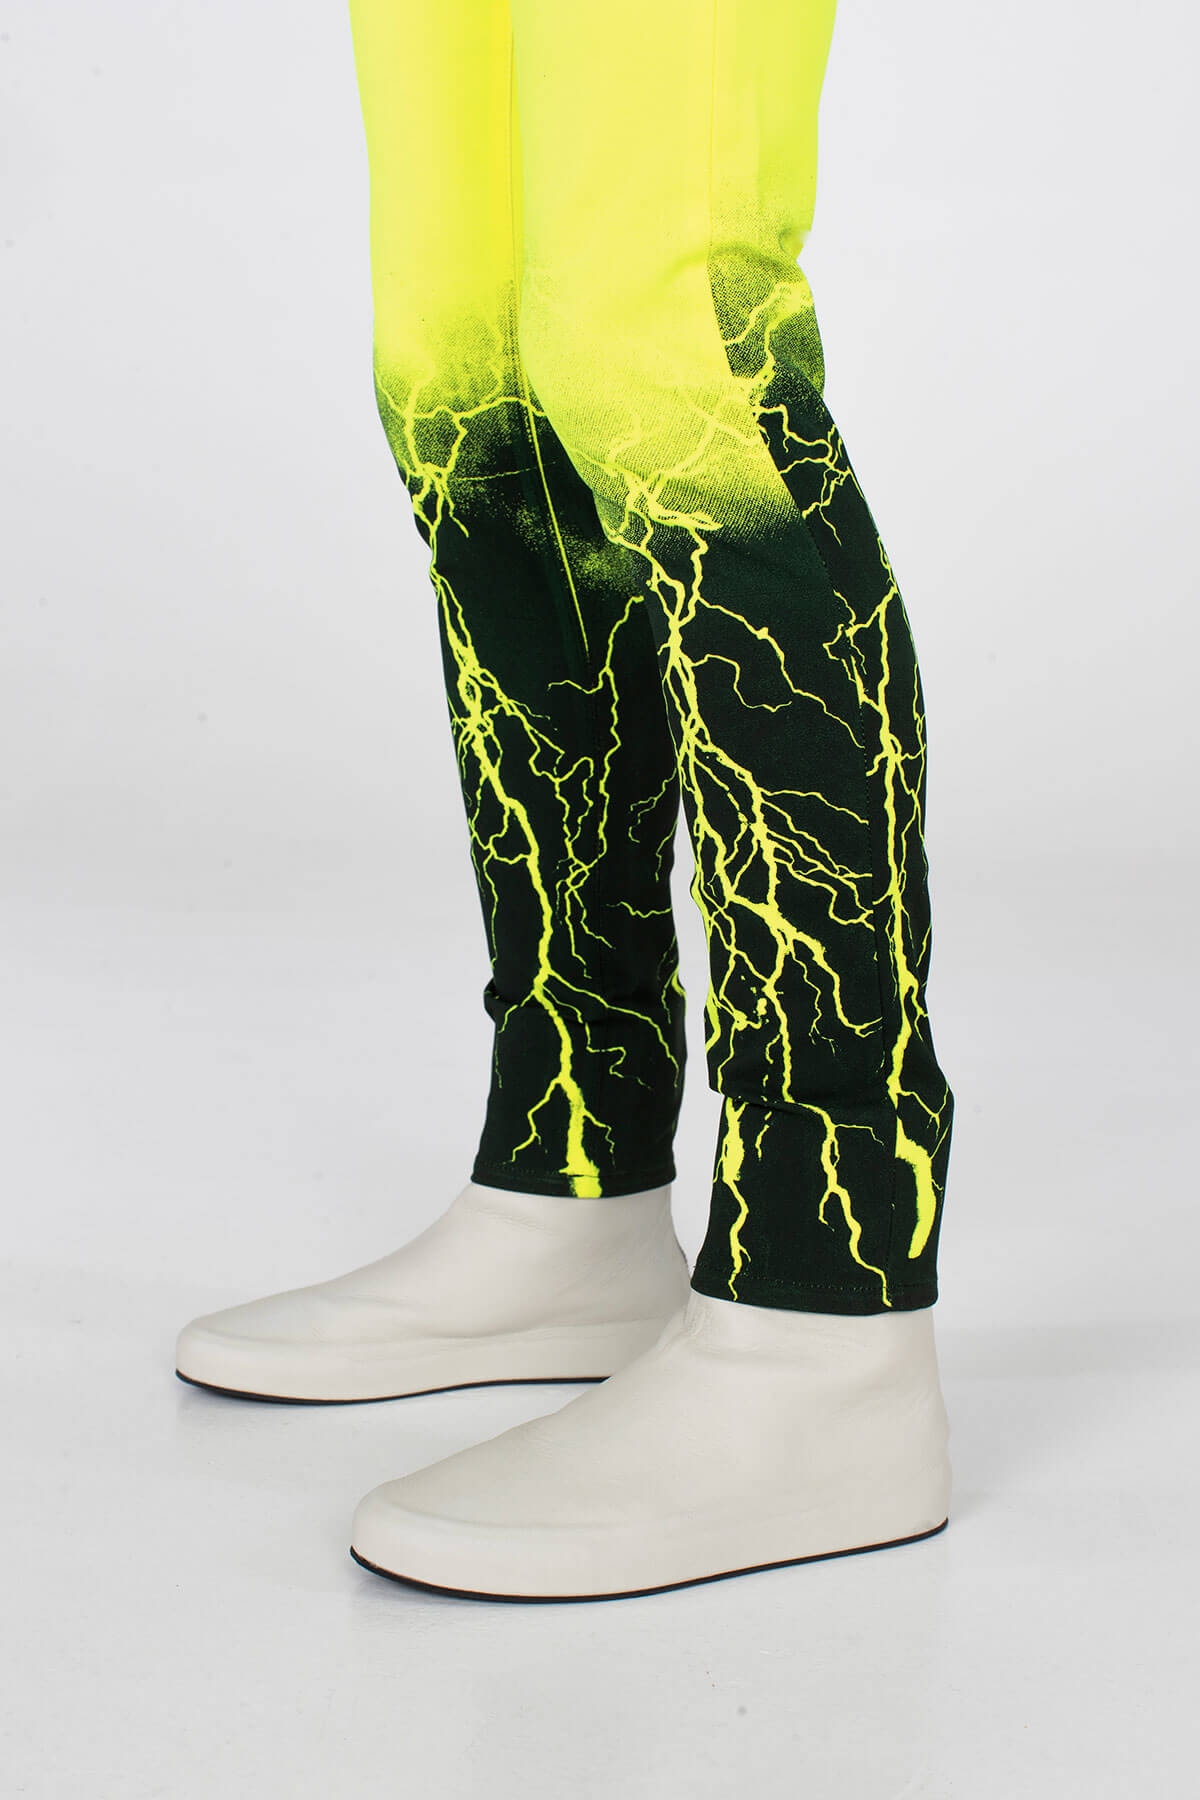 Crixus Jeans – Lightning Neon Yellow - BOTTOM - MJB